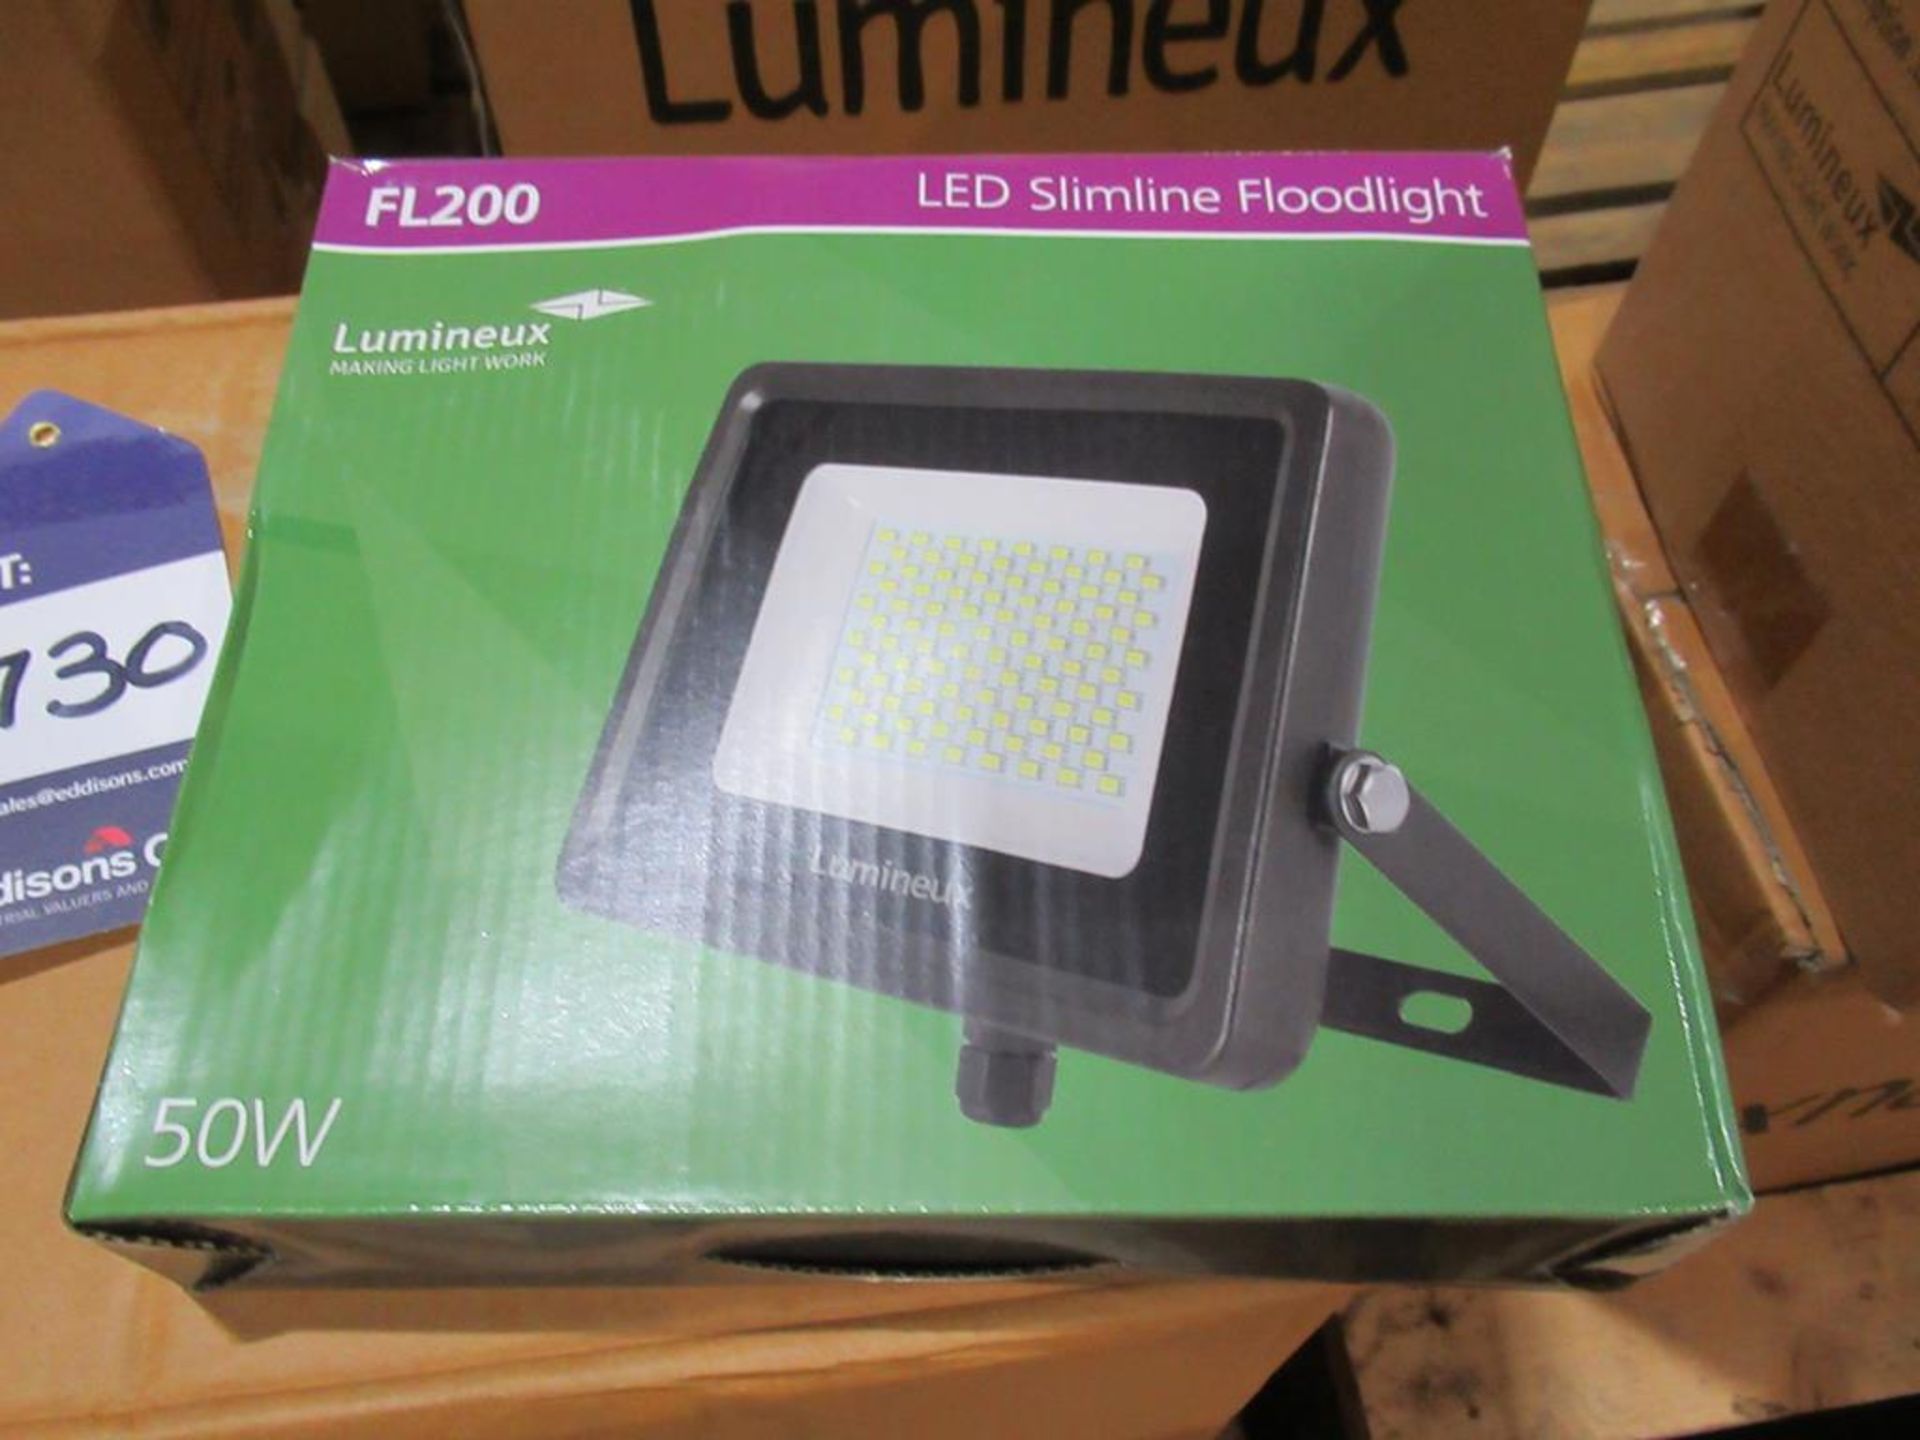 20 x LED 50W Slimline Floodlight 4000K OEM Trade Price £600 - Image 3 of 3